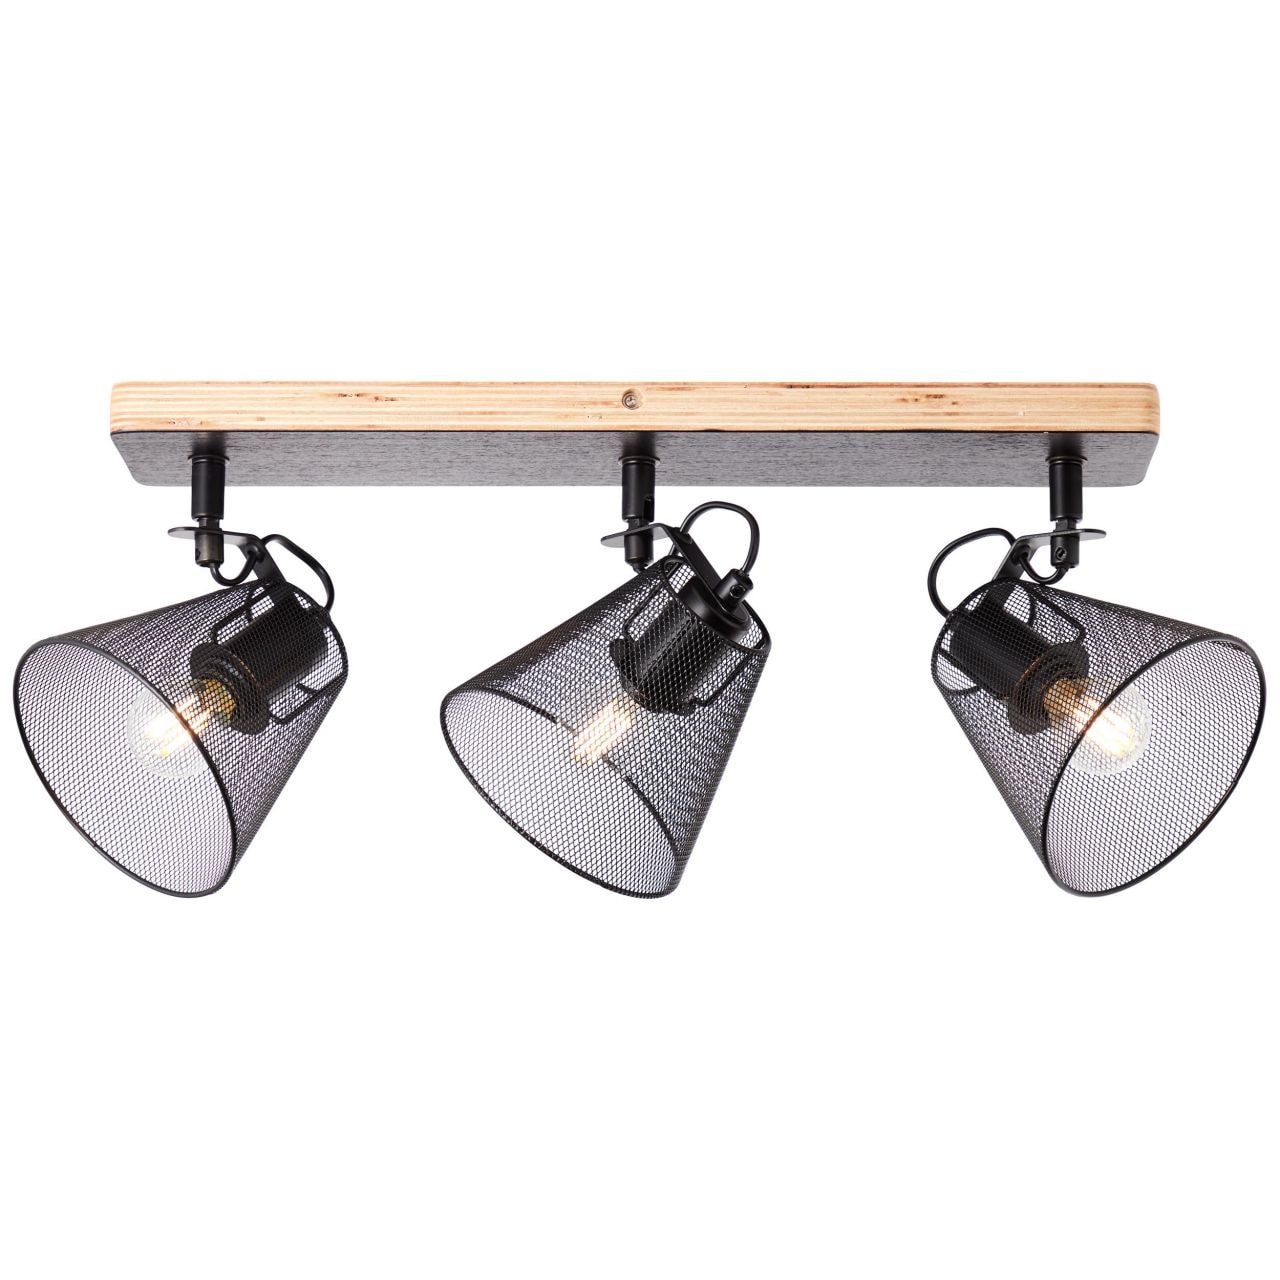 BRILLIANT Lampe, Whole Spotbalken 3flg schwarz/holzfarbend, Metall/Holz, 3x D45, E14, 40W,Tropfenlampen (nicht enthalten